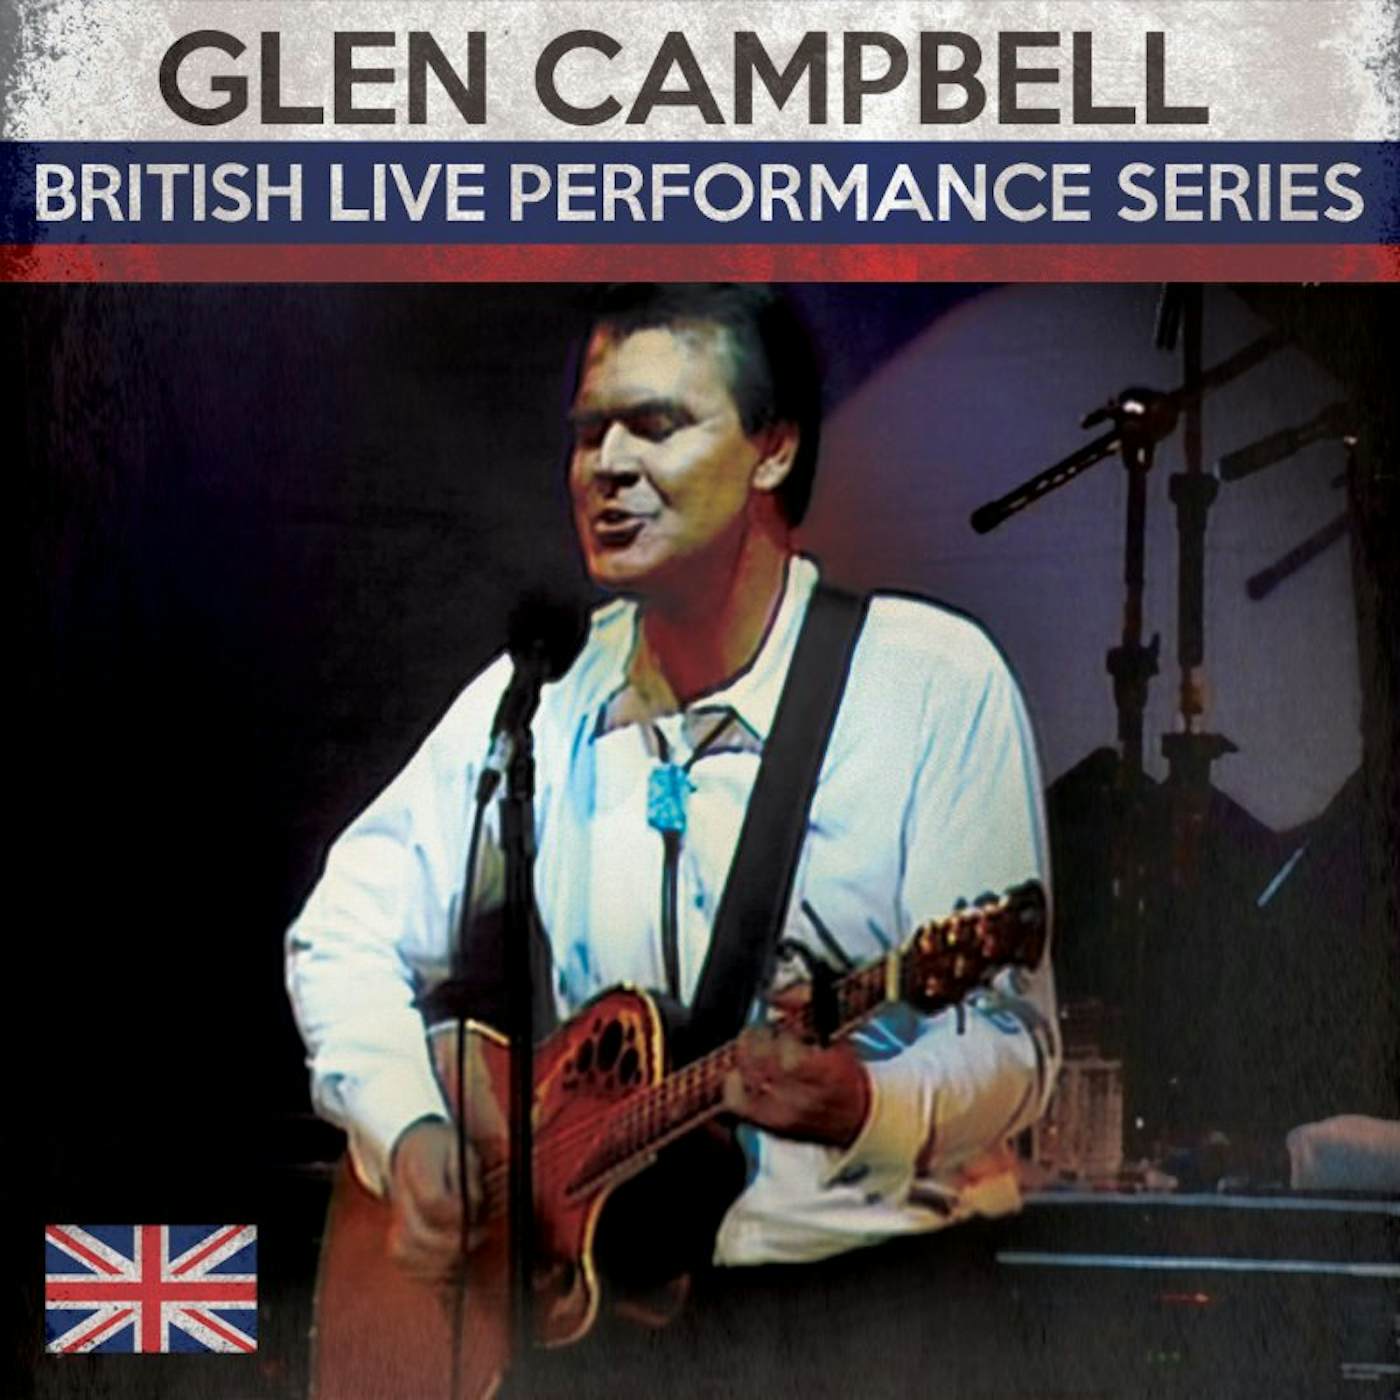 Glen Campbell BRITISH LIVE PERFORMANCE SERIES CD